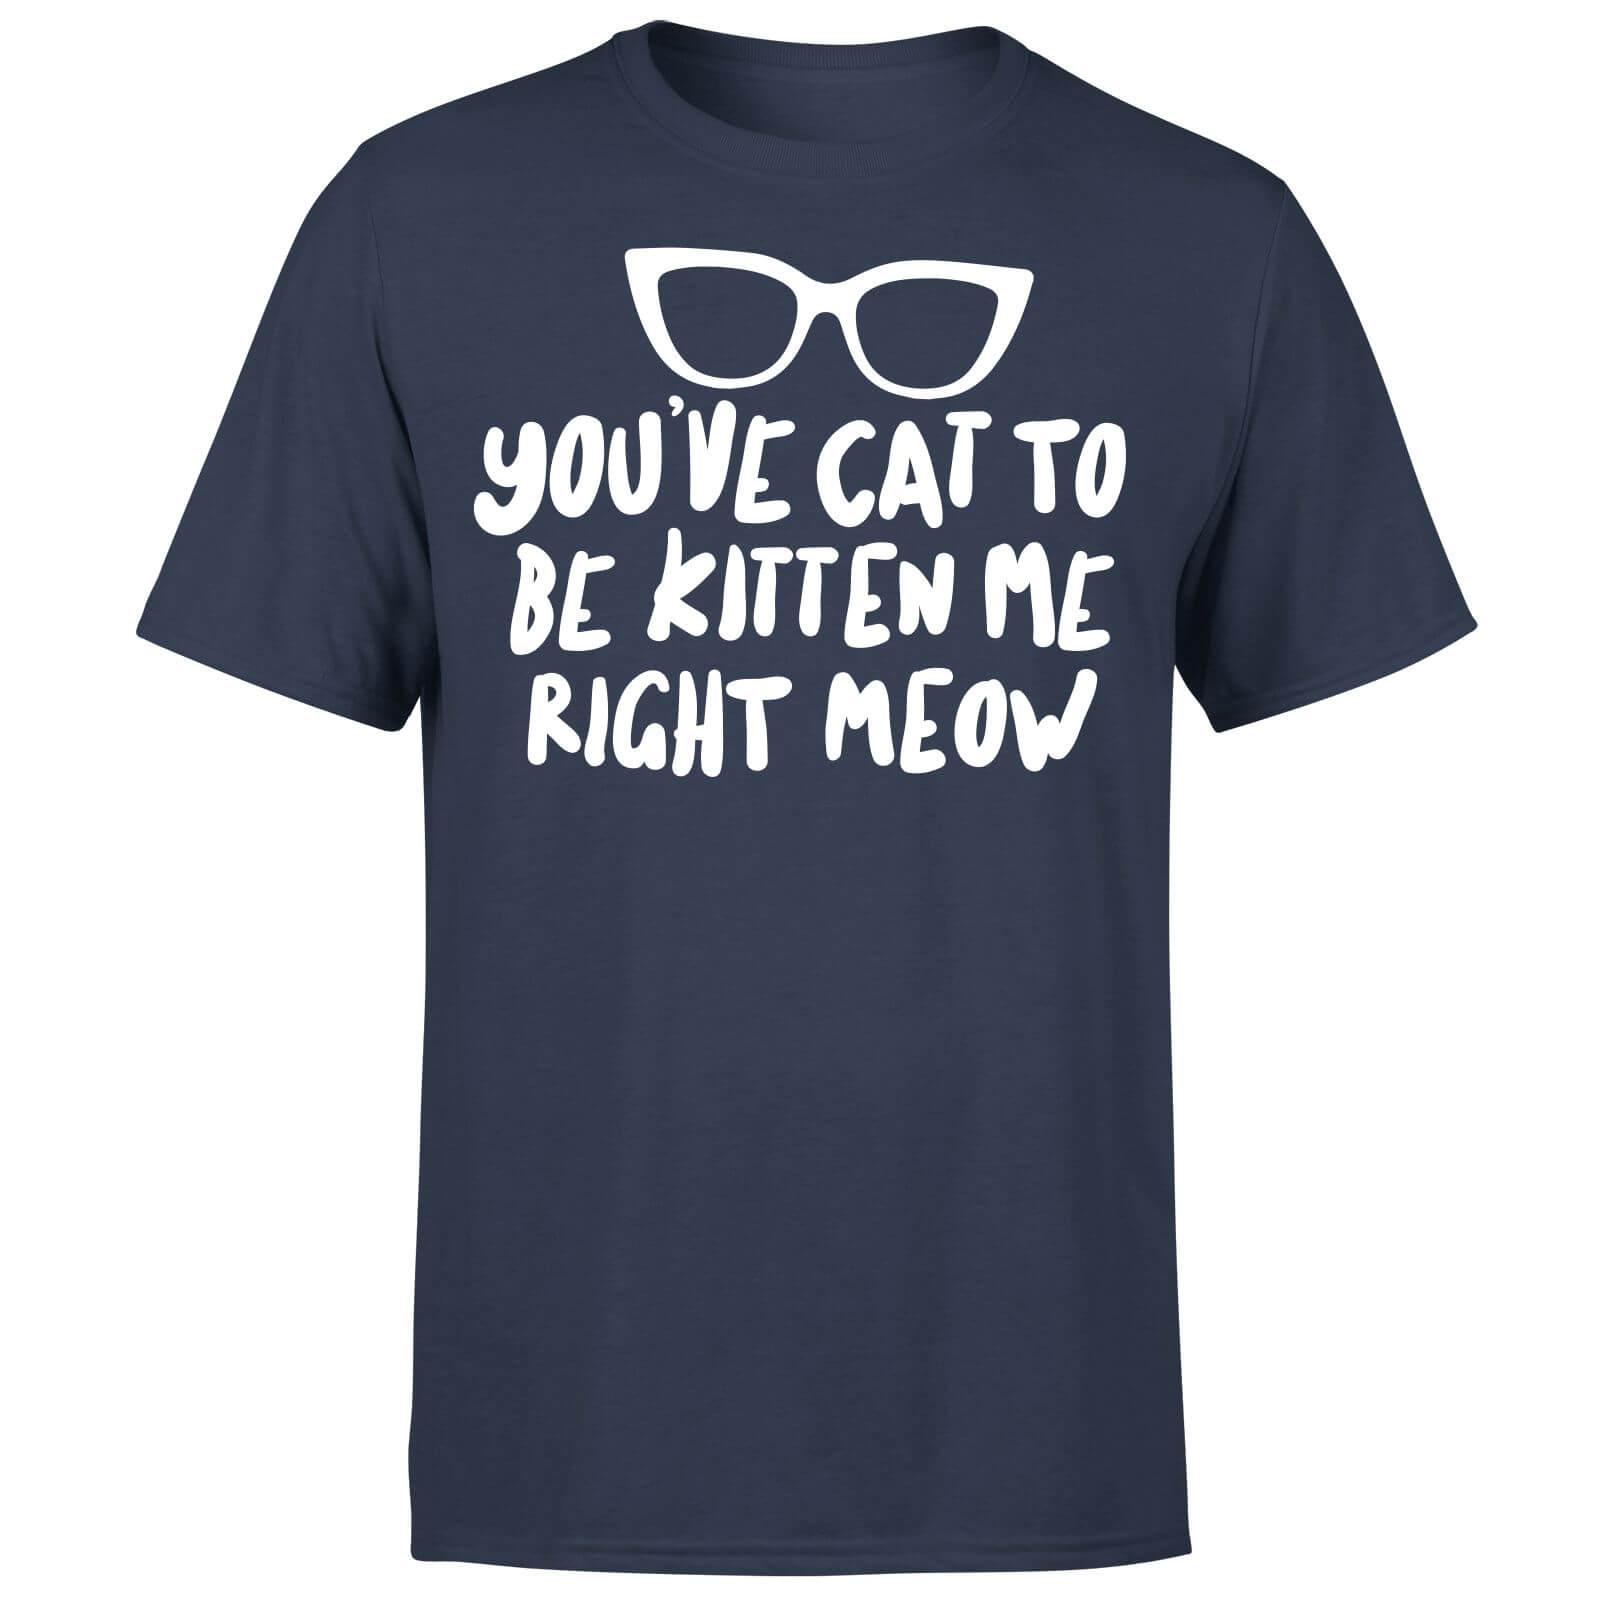 You've Cat To Be Kitten Me T-Shirt - Navy - S - Navy